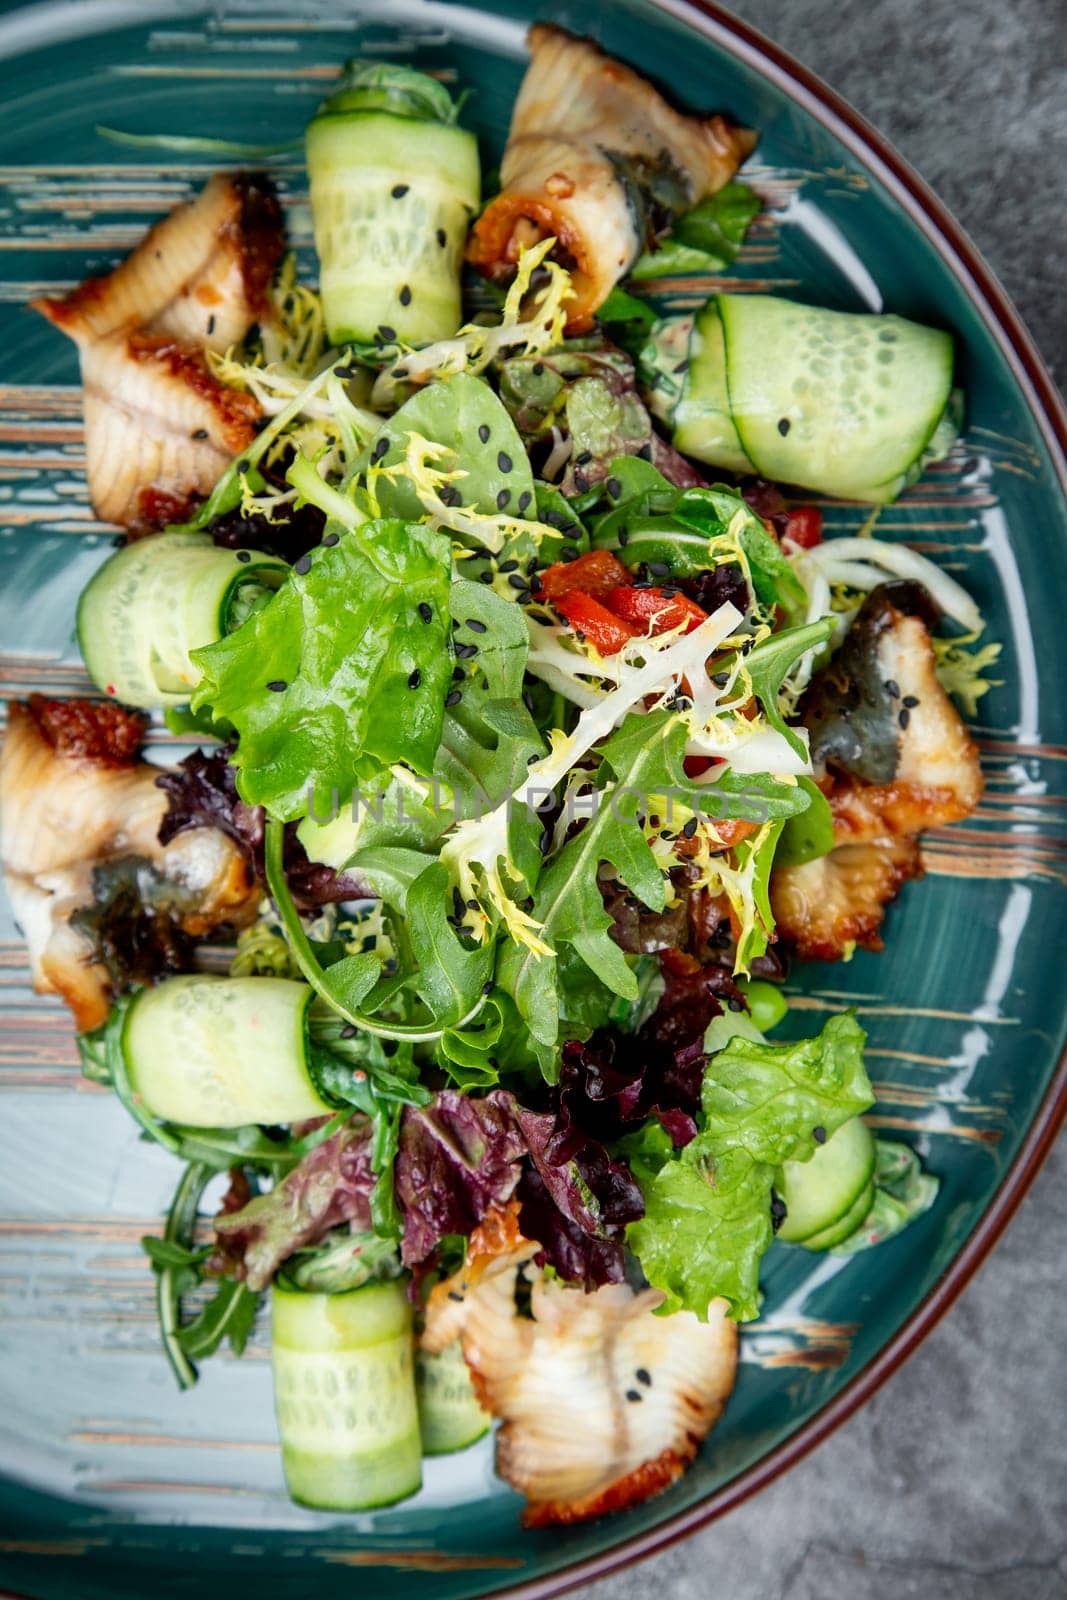 salad with arugula, lettuce, cucumber rolls, fish and sesame seeds